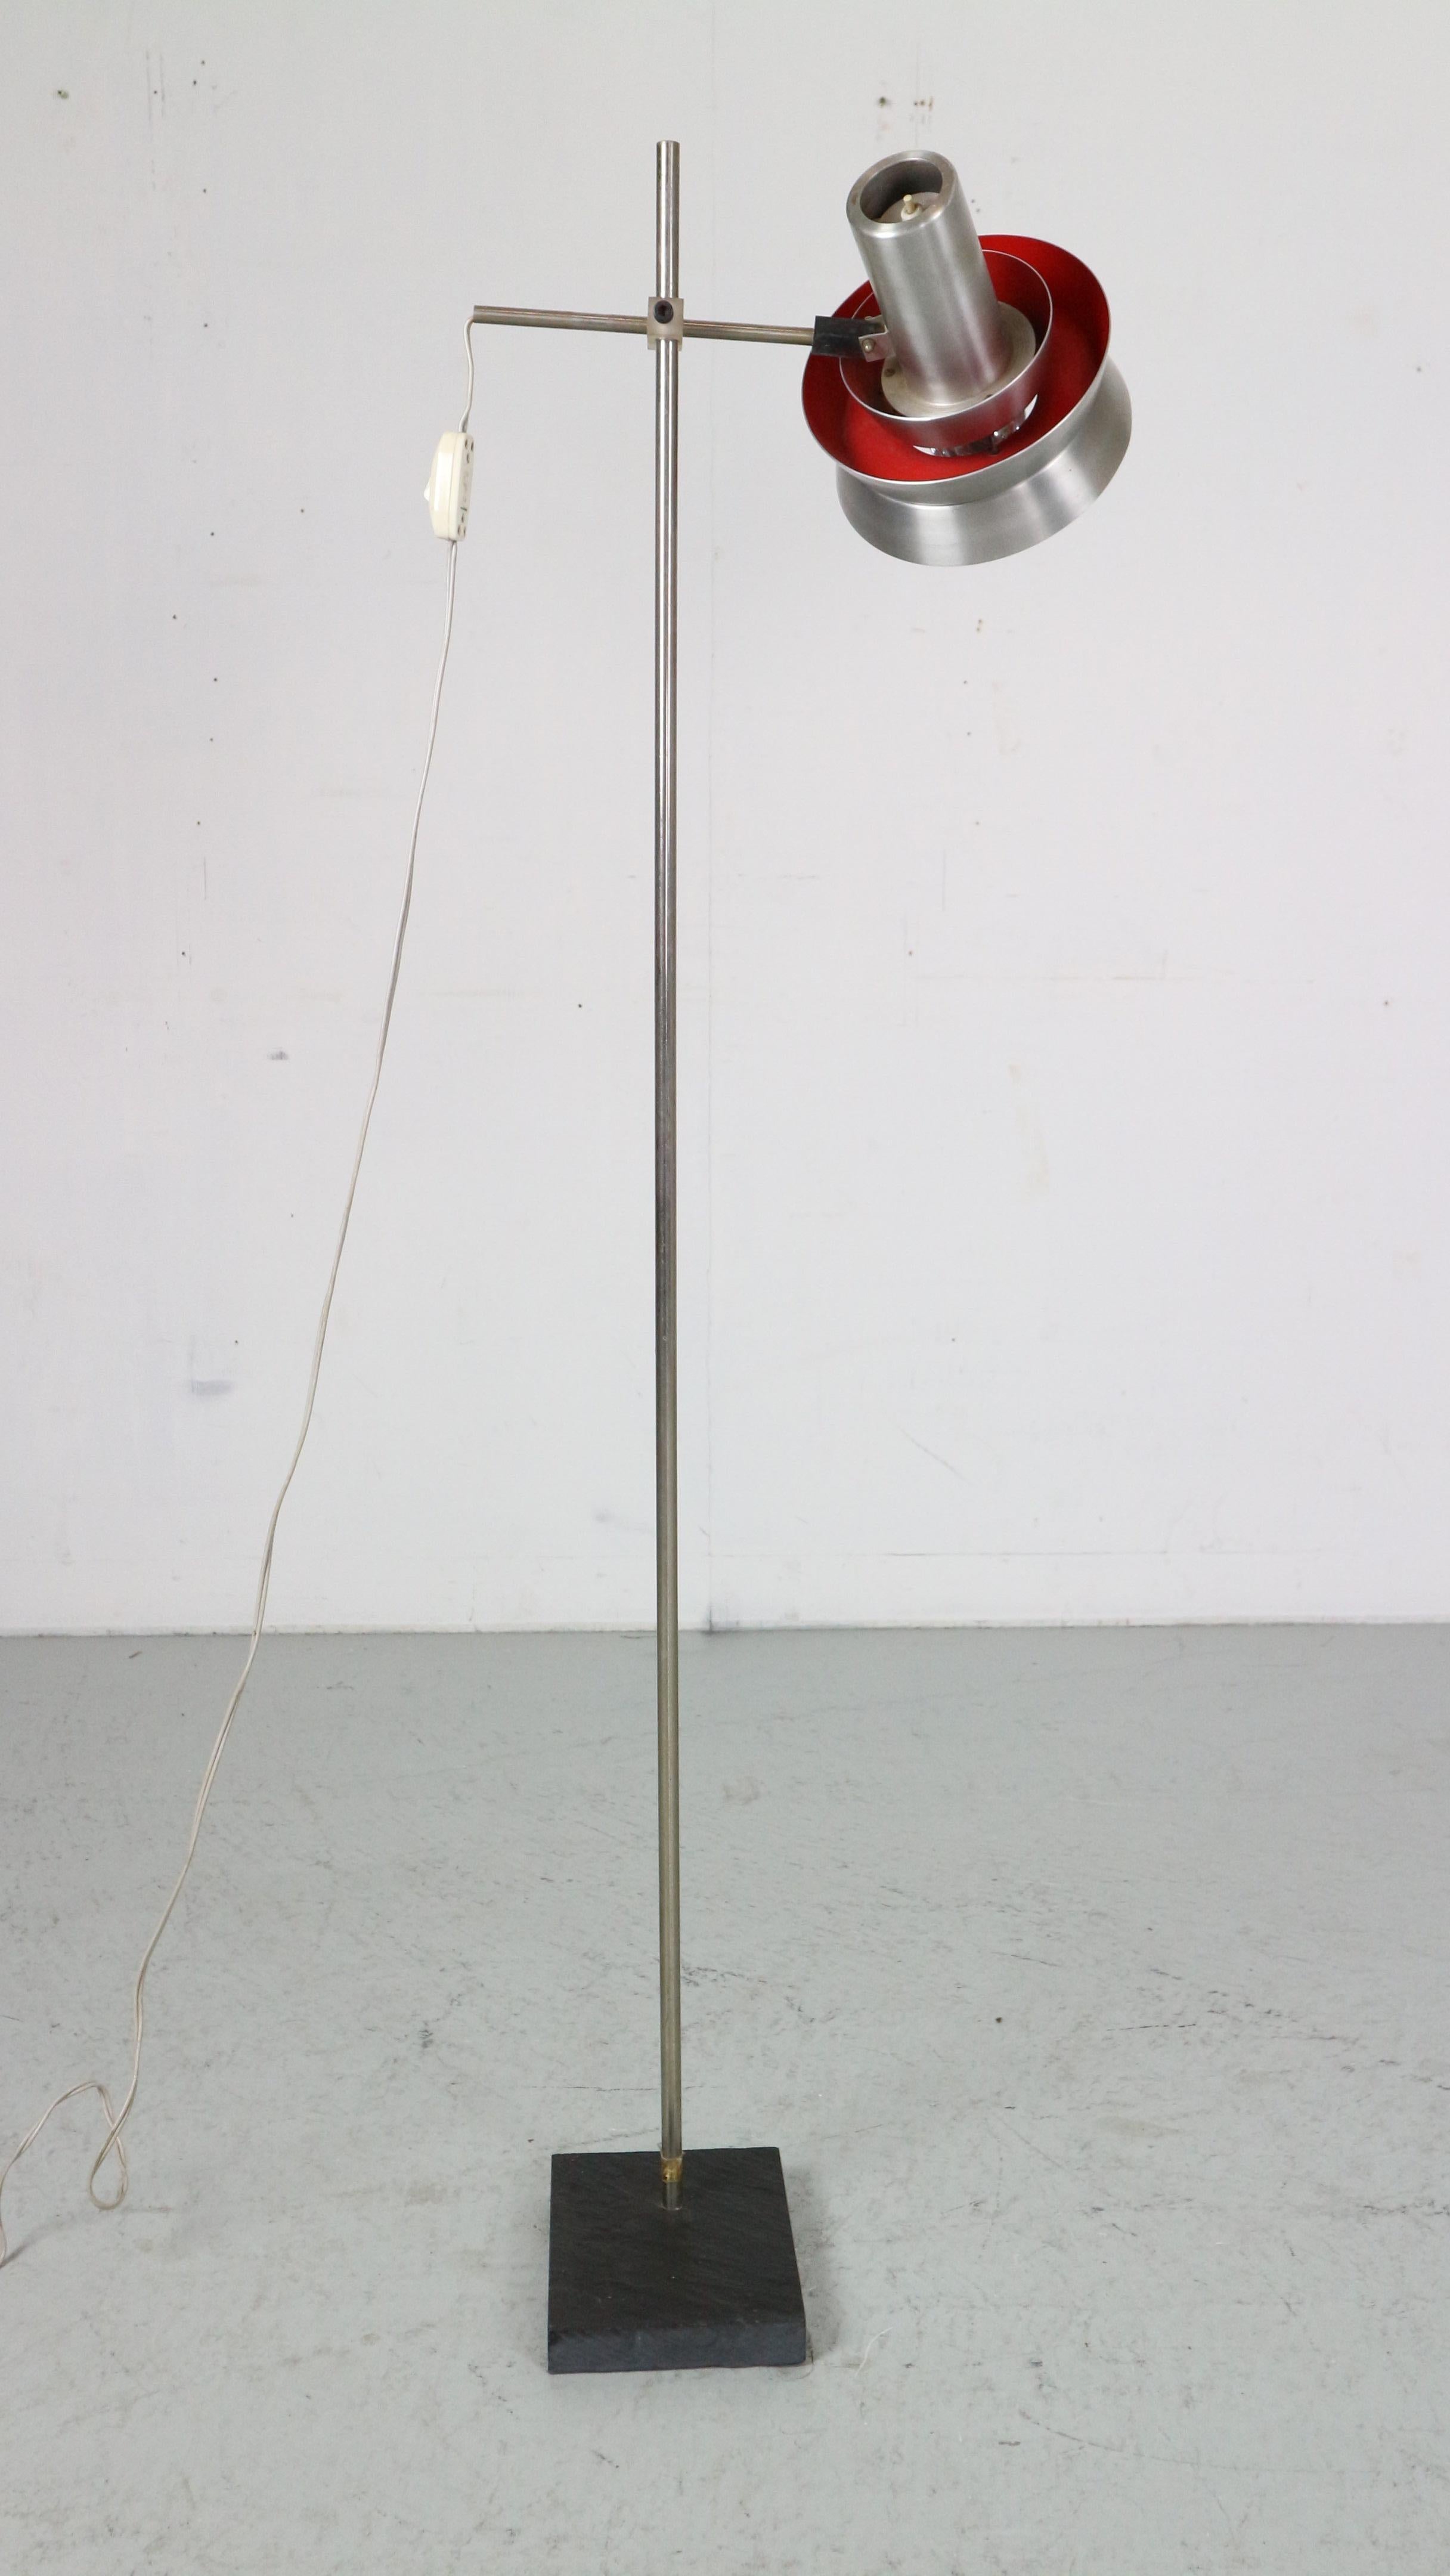 Late 20th Century Scandinavian Modern Adjustable Floor Lamp by Carl Thore 1970's Denmark For Sale